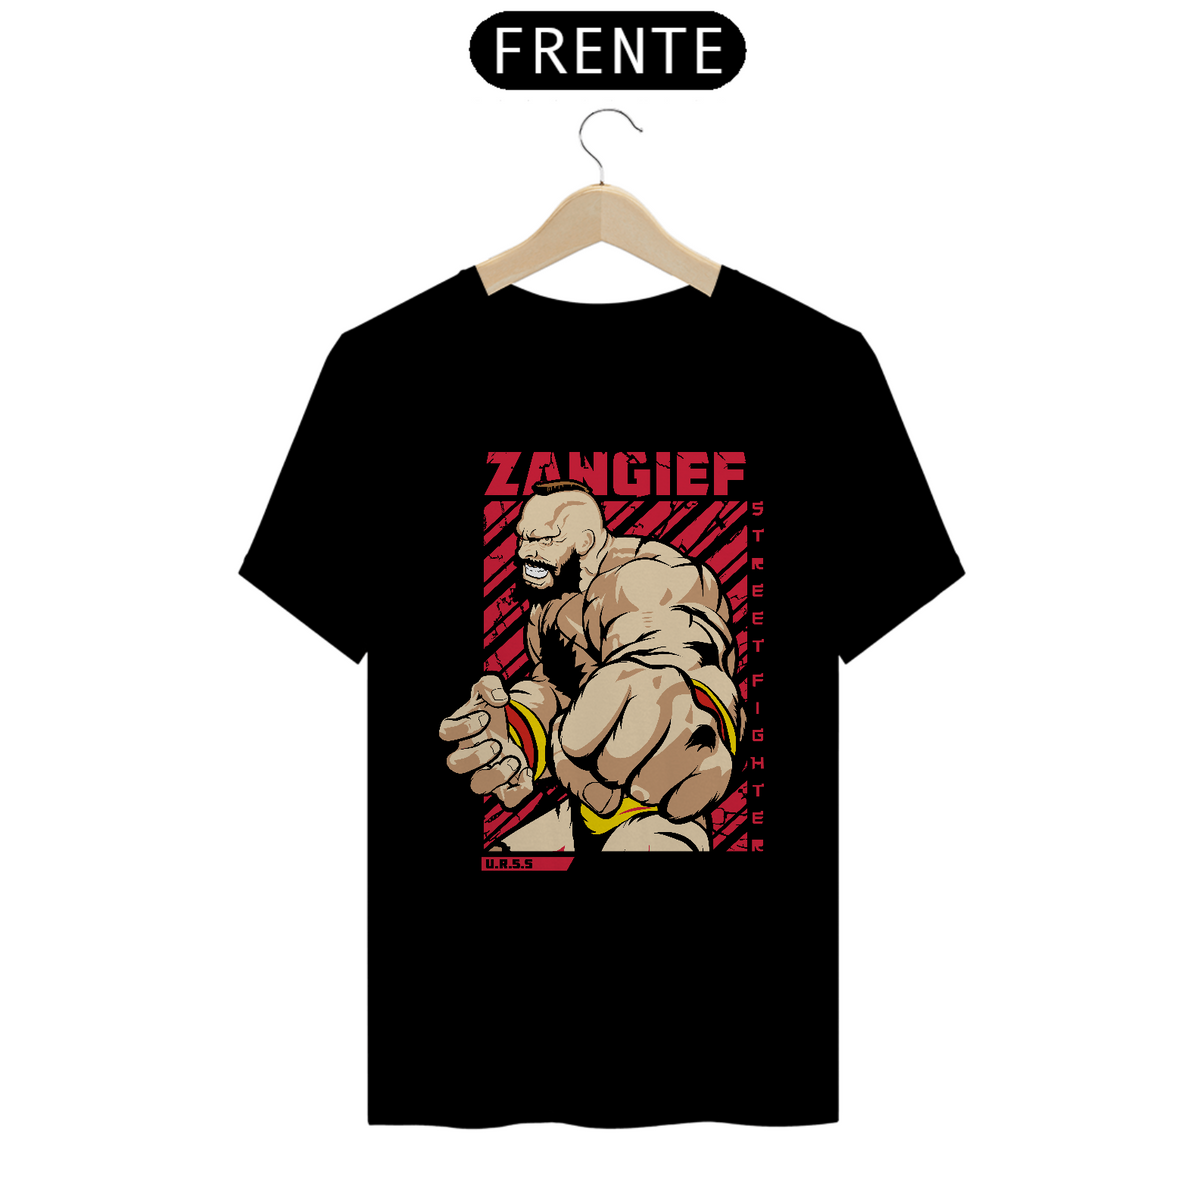 Nome do produto: Camiseta Zangief SF2